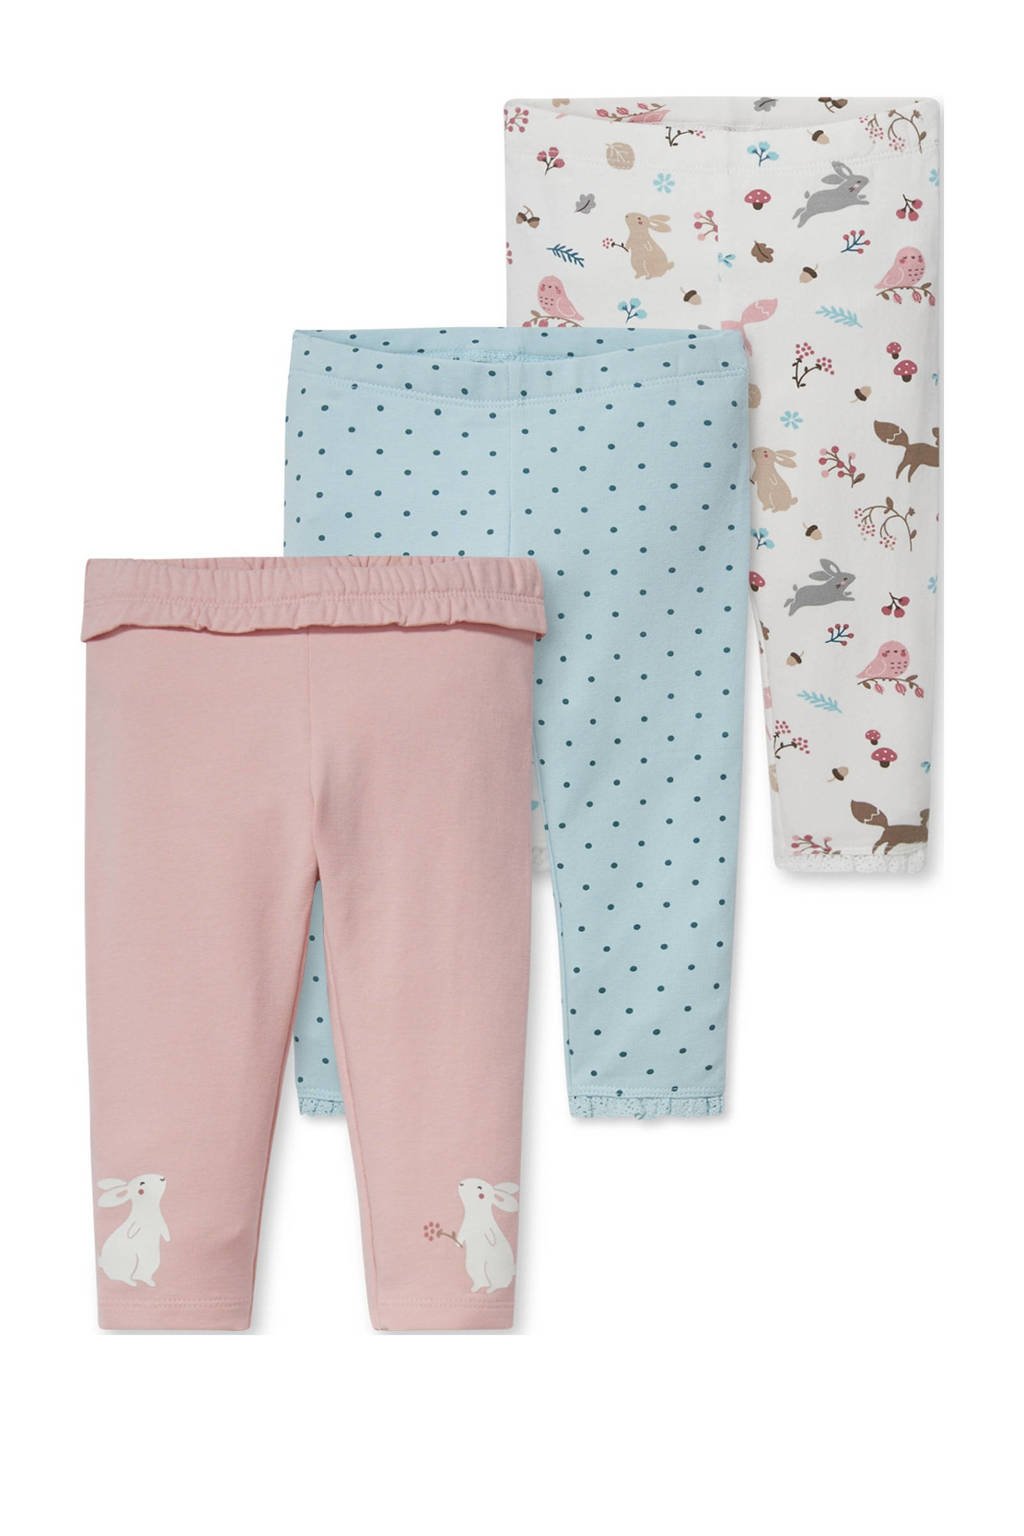 C&A Baby Club legging - set van 3 roze/lichtblauw/wit, Roze/blauw/wit